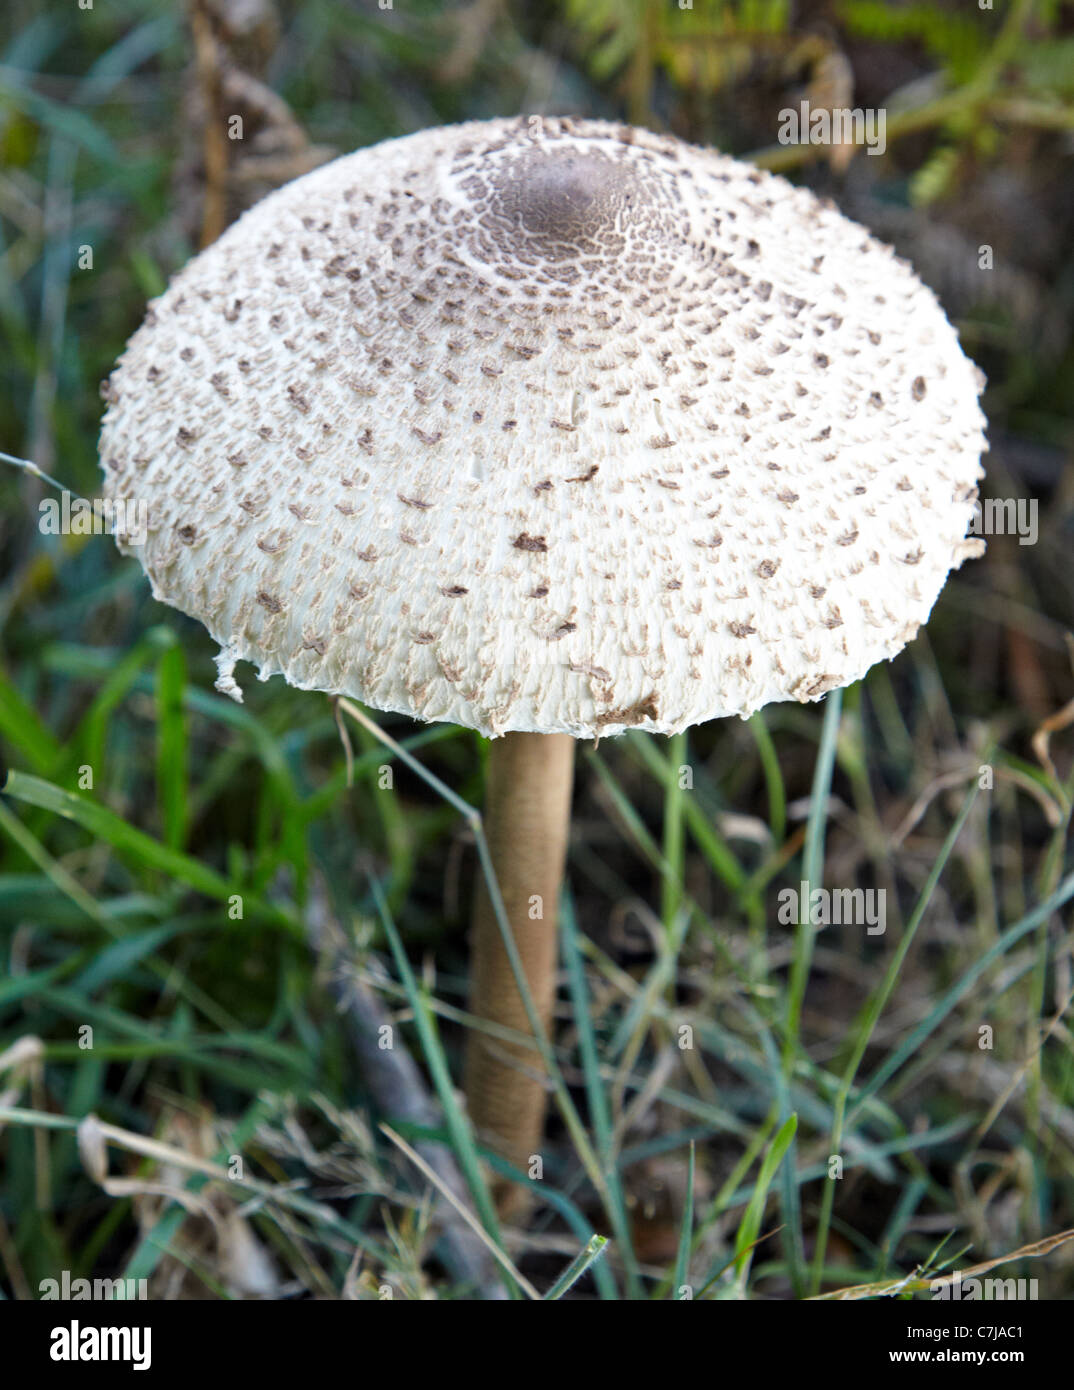 A Shaggy Parasol Mushroom Richmond Park Surrey UK Stock Photo